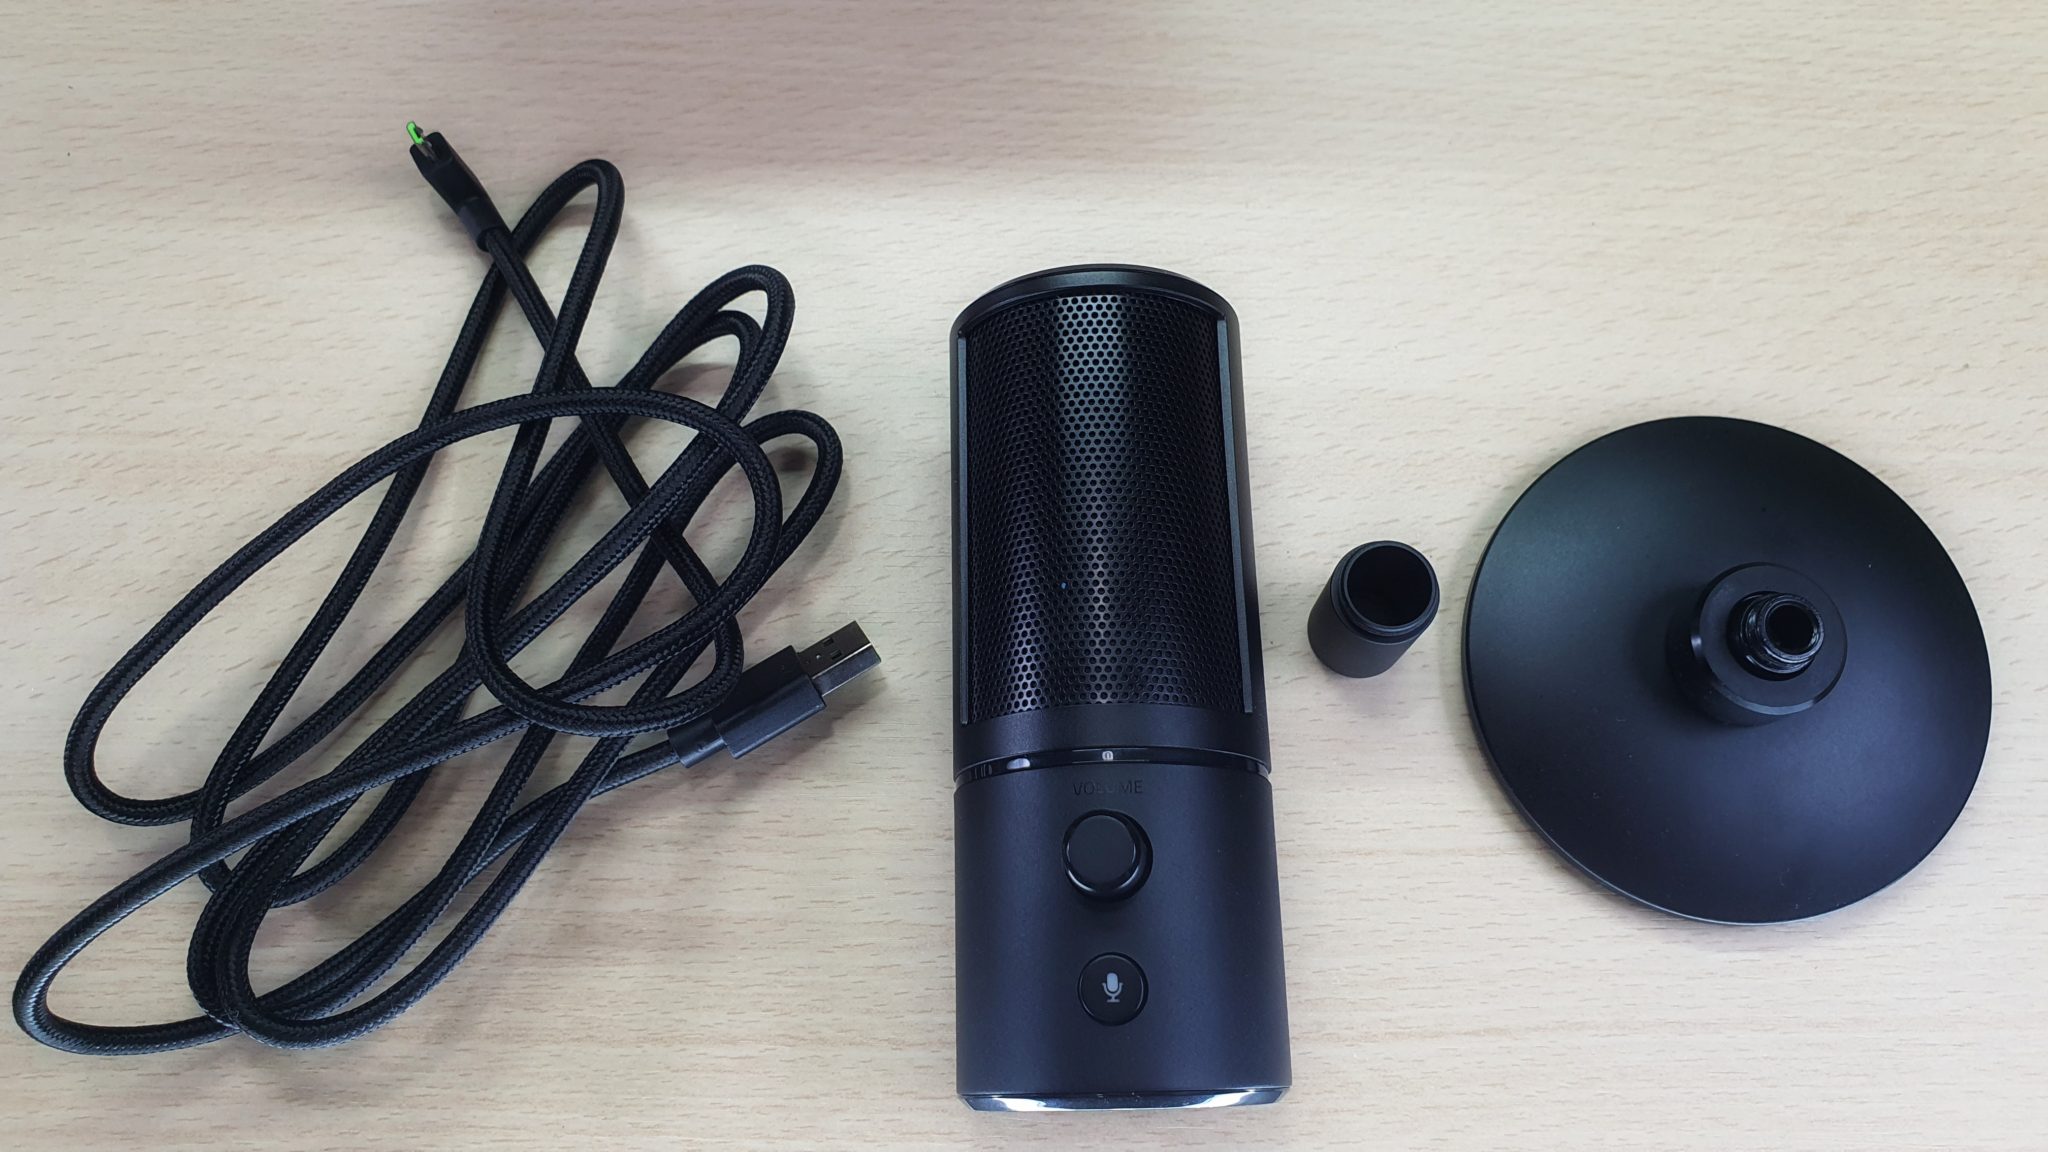 Razer Seiren X USB Condenser Microphone Review - The mobile streamer’s